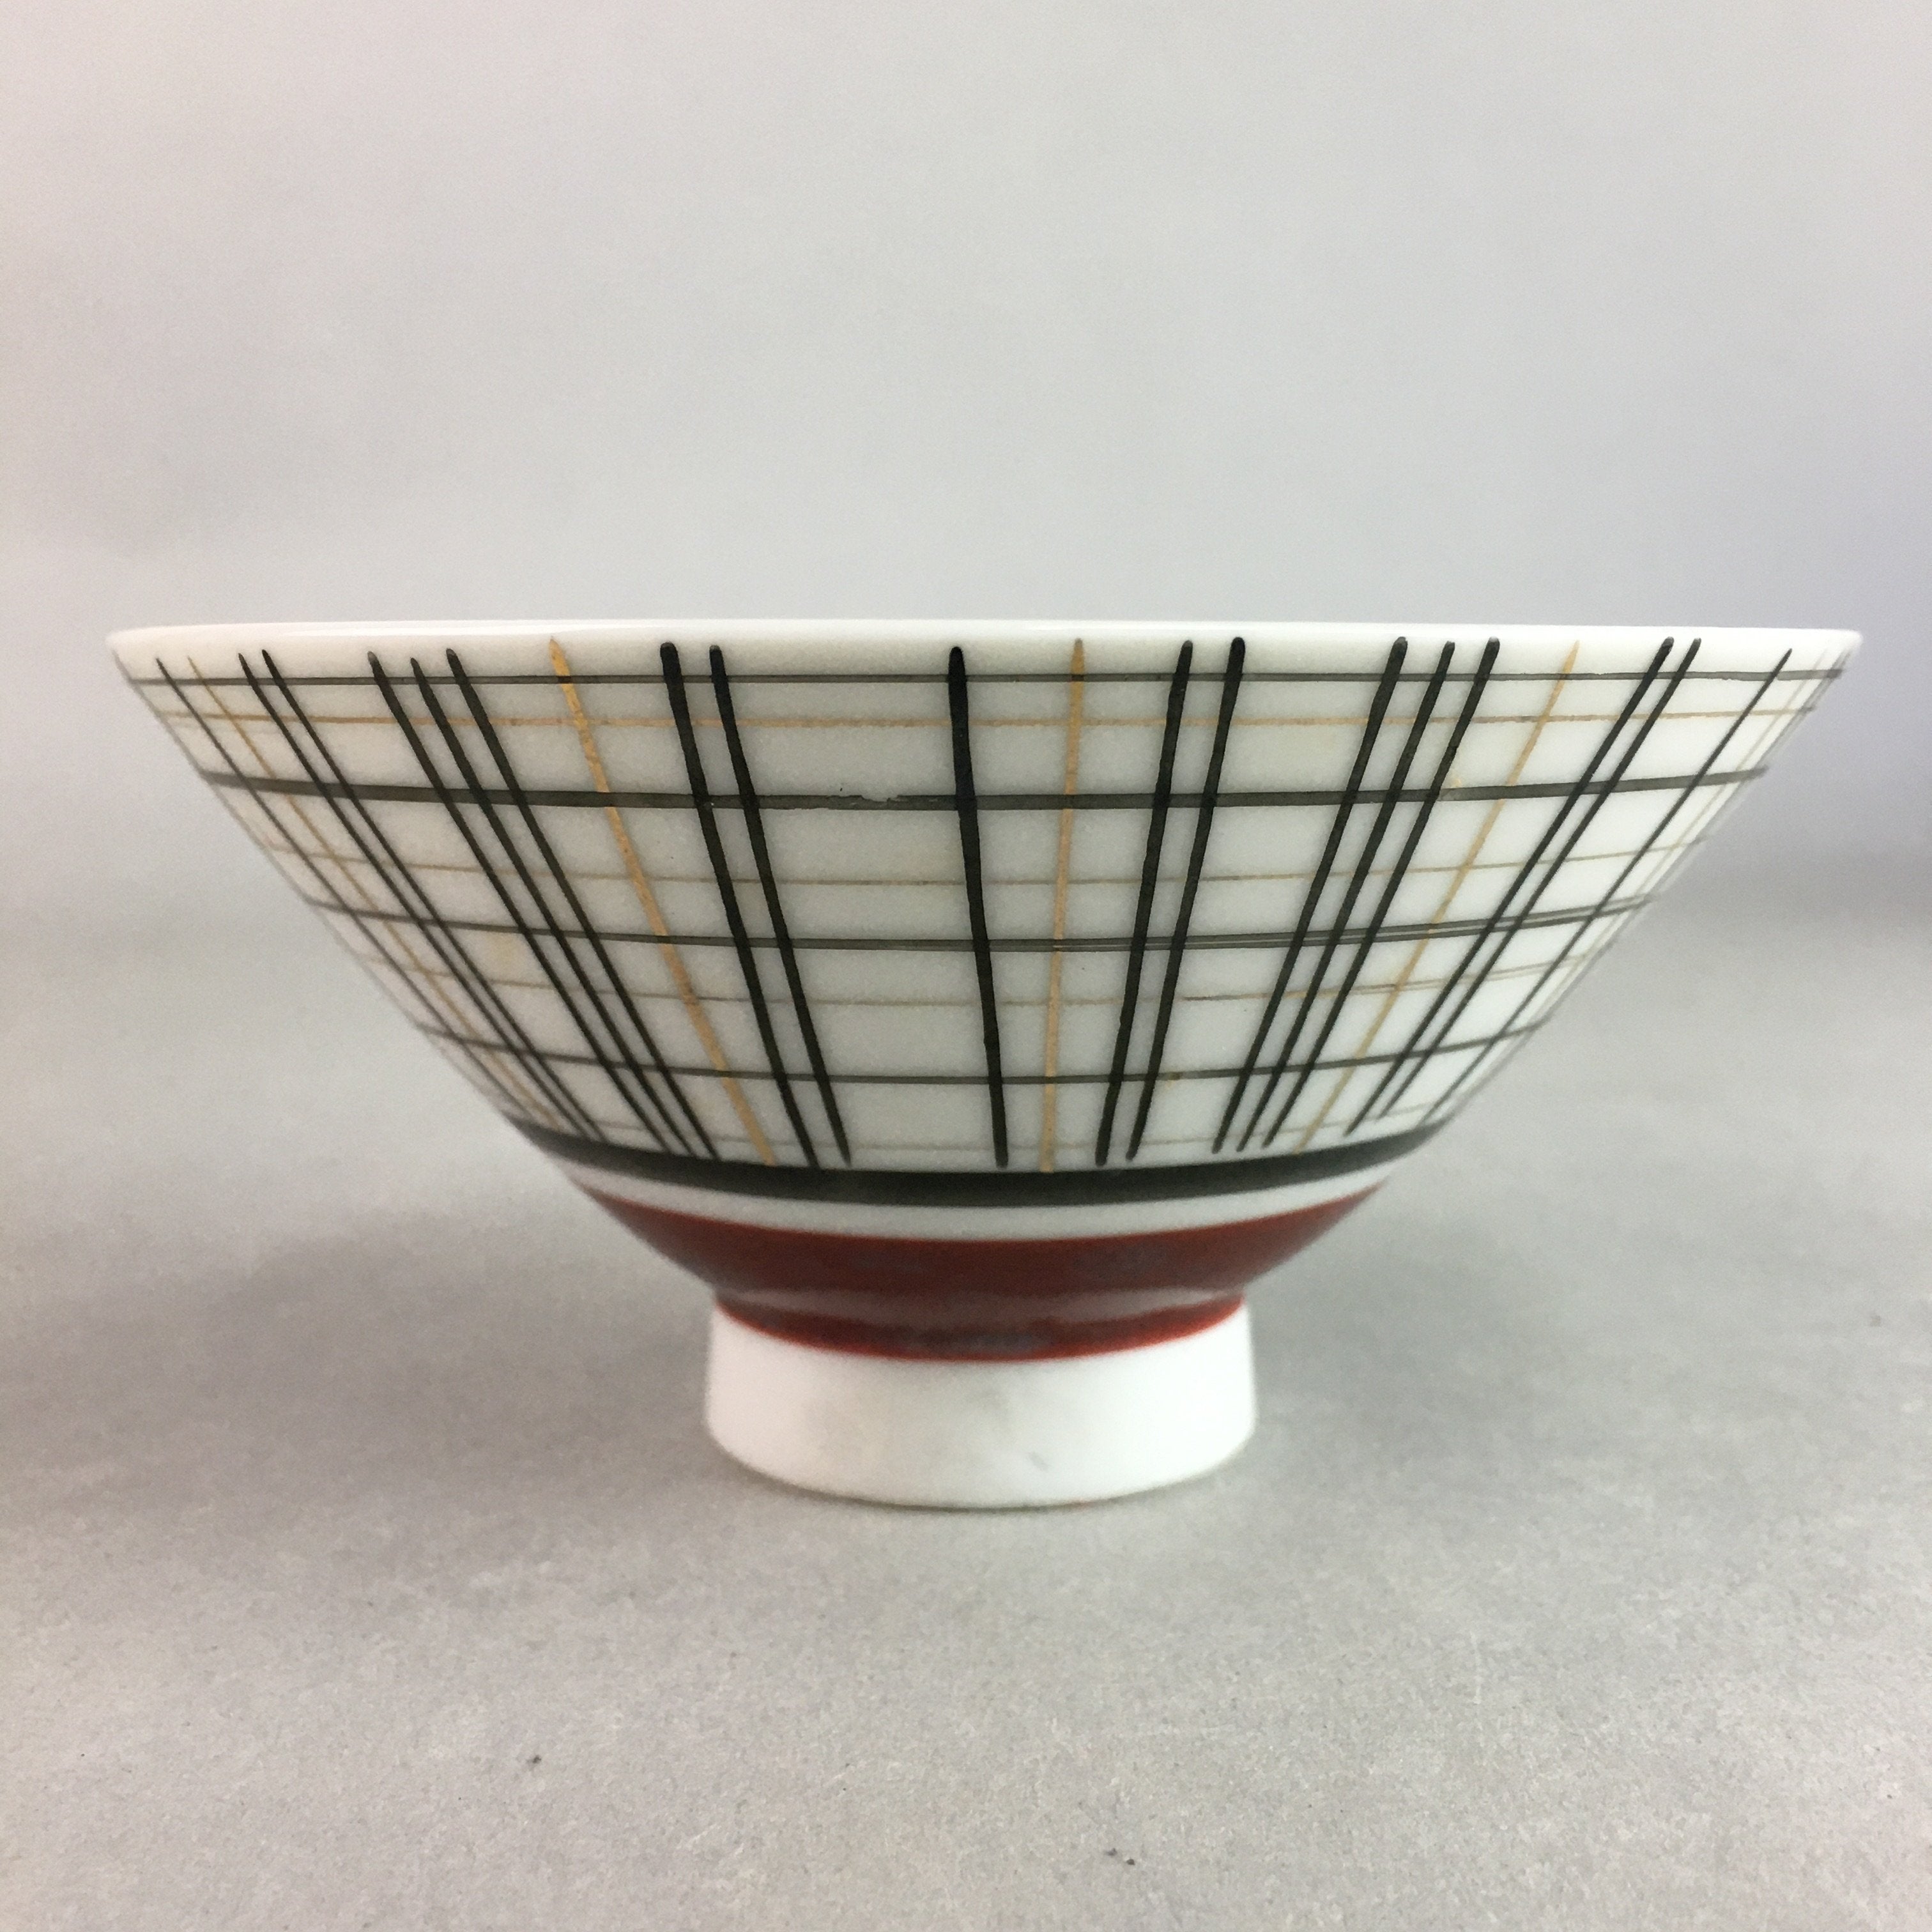 Japanese Porcelain Rice Bowl Vtg Chawan Plaid Black Gold Red PP276